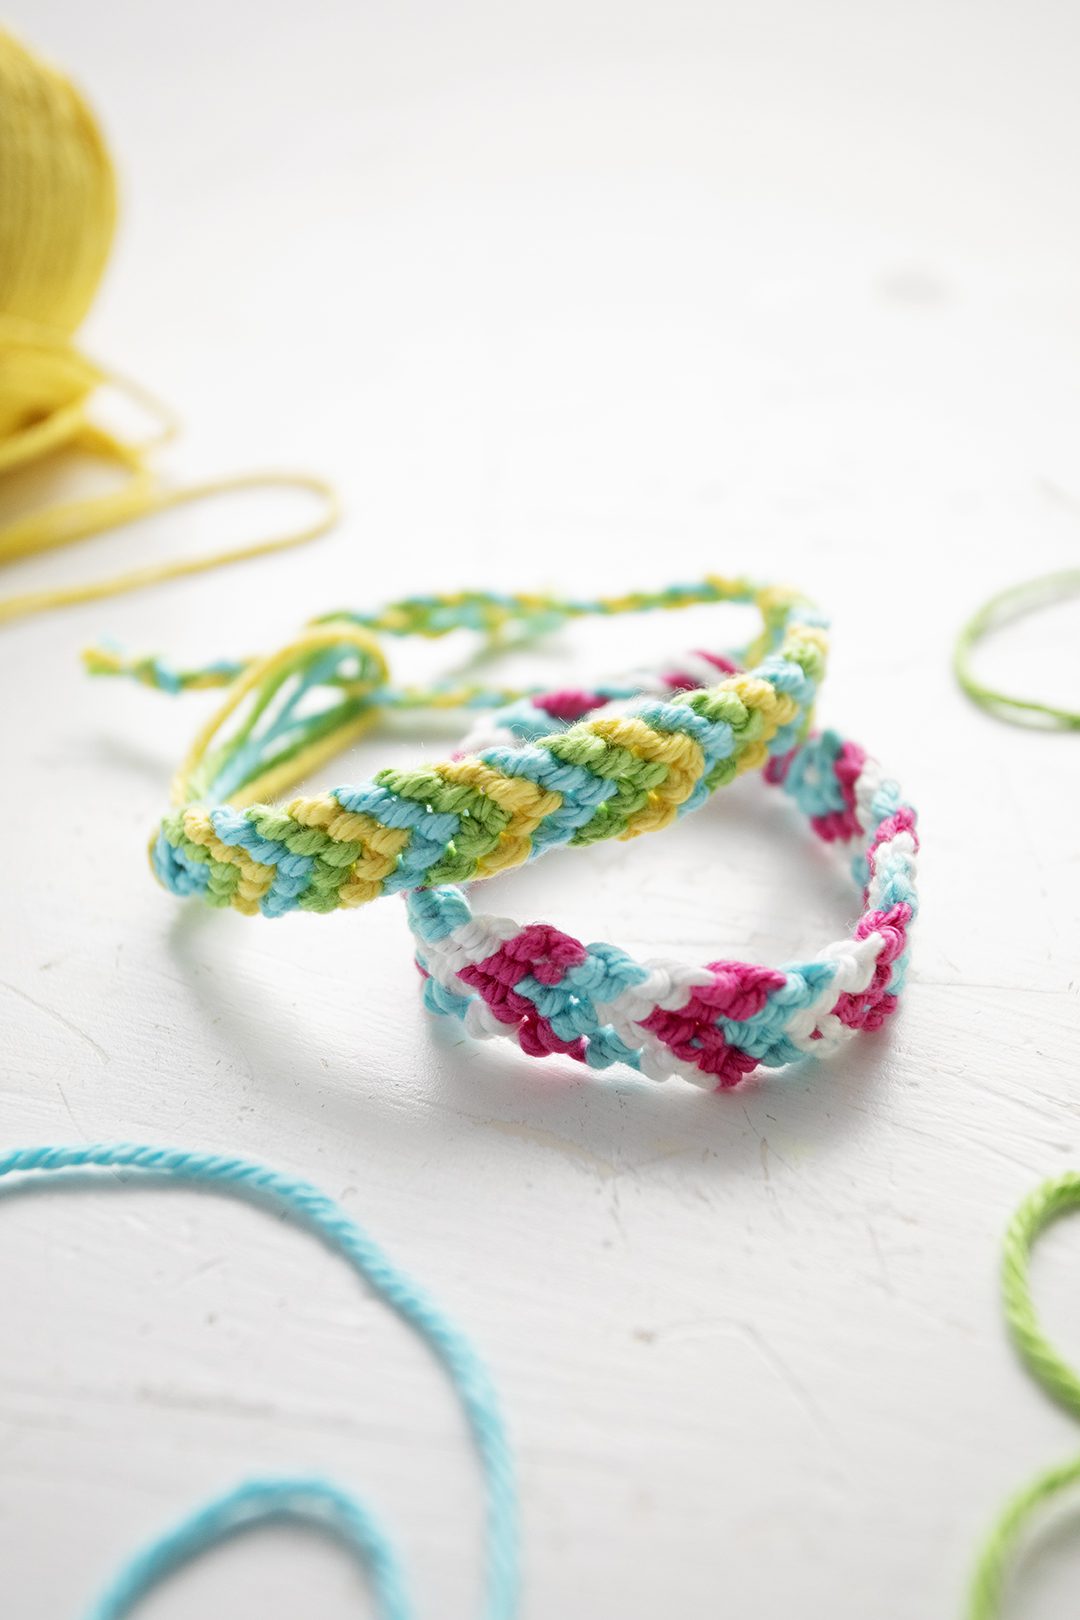 Easy Friendship Bracelet Tutorial - Cutesy Crafts